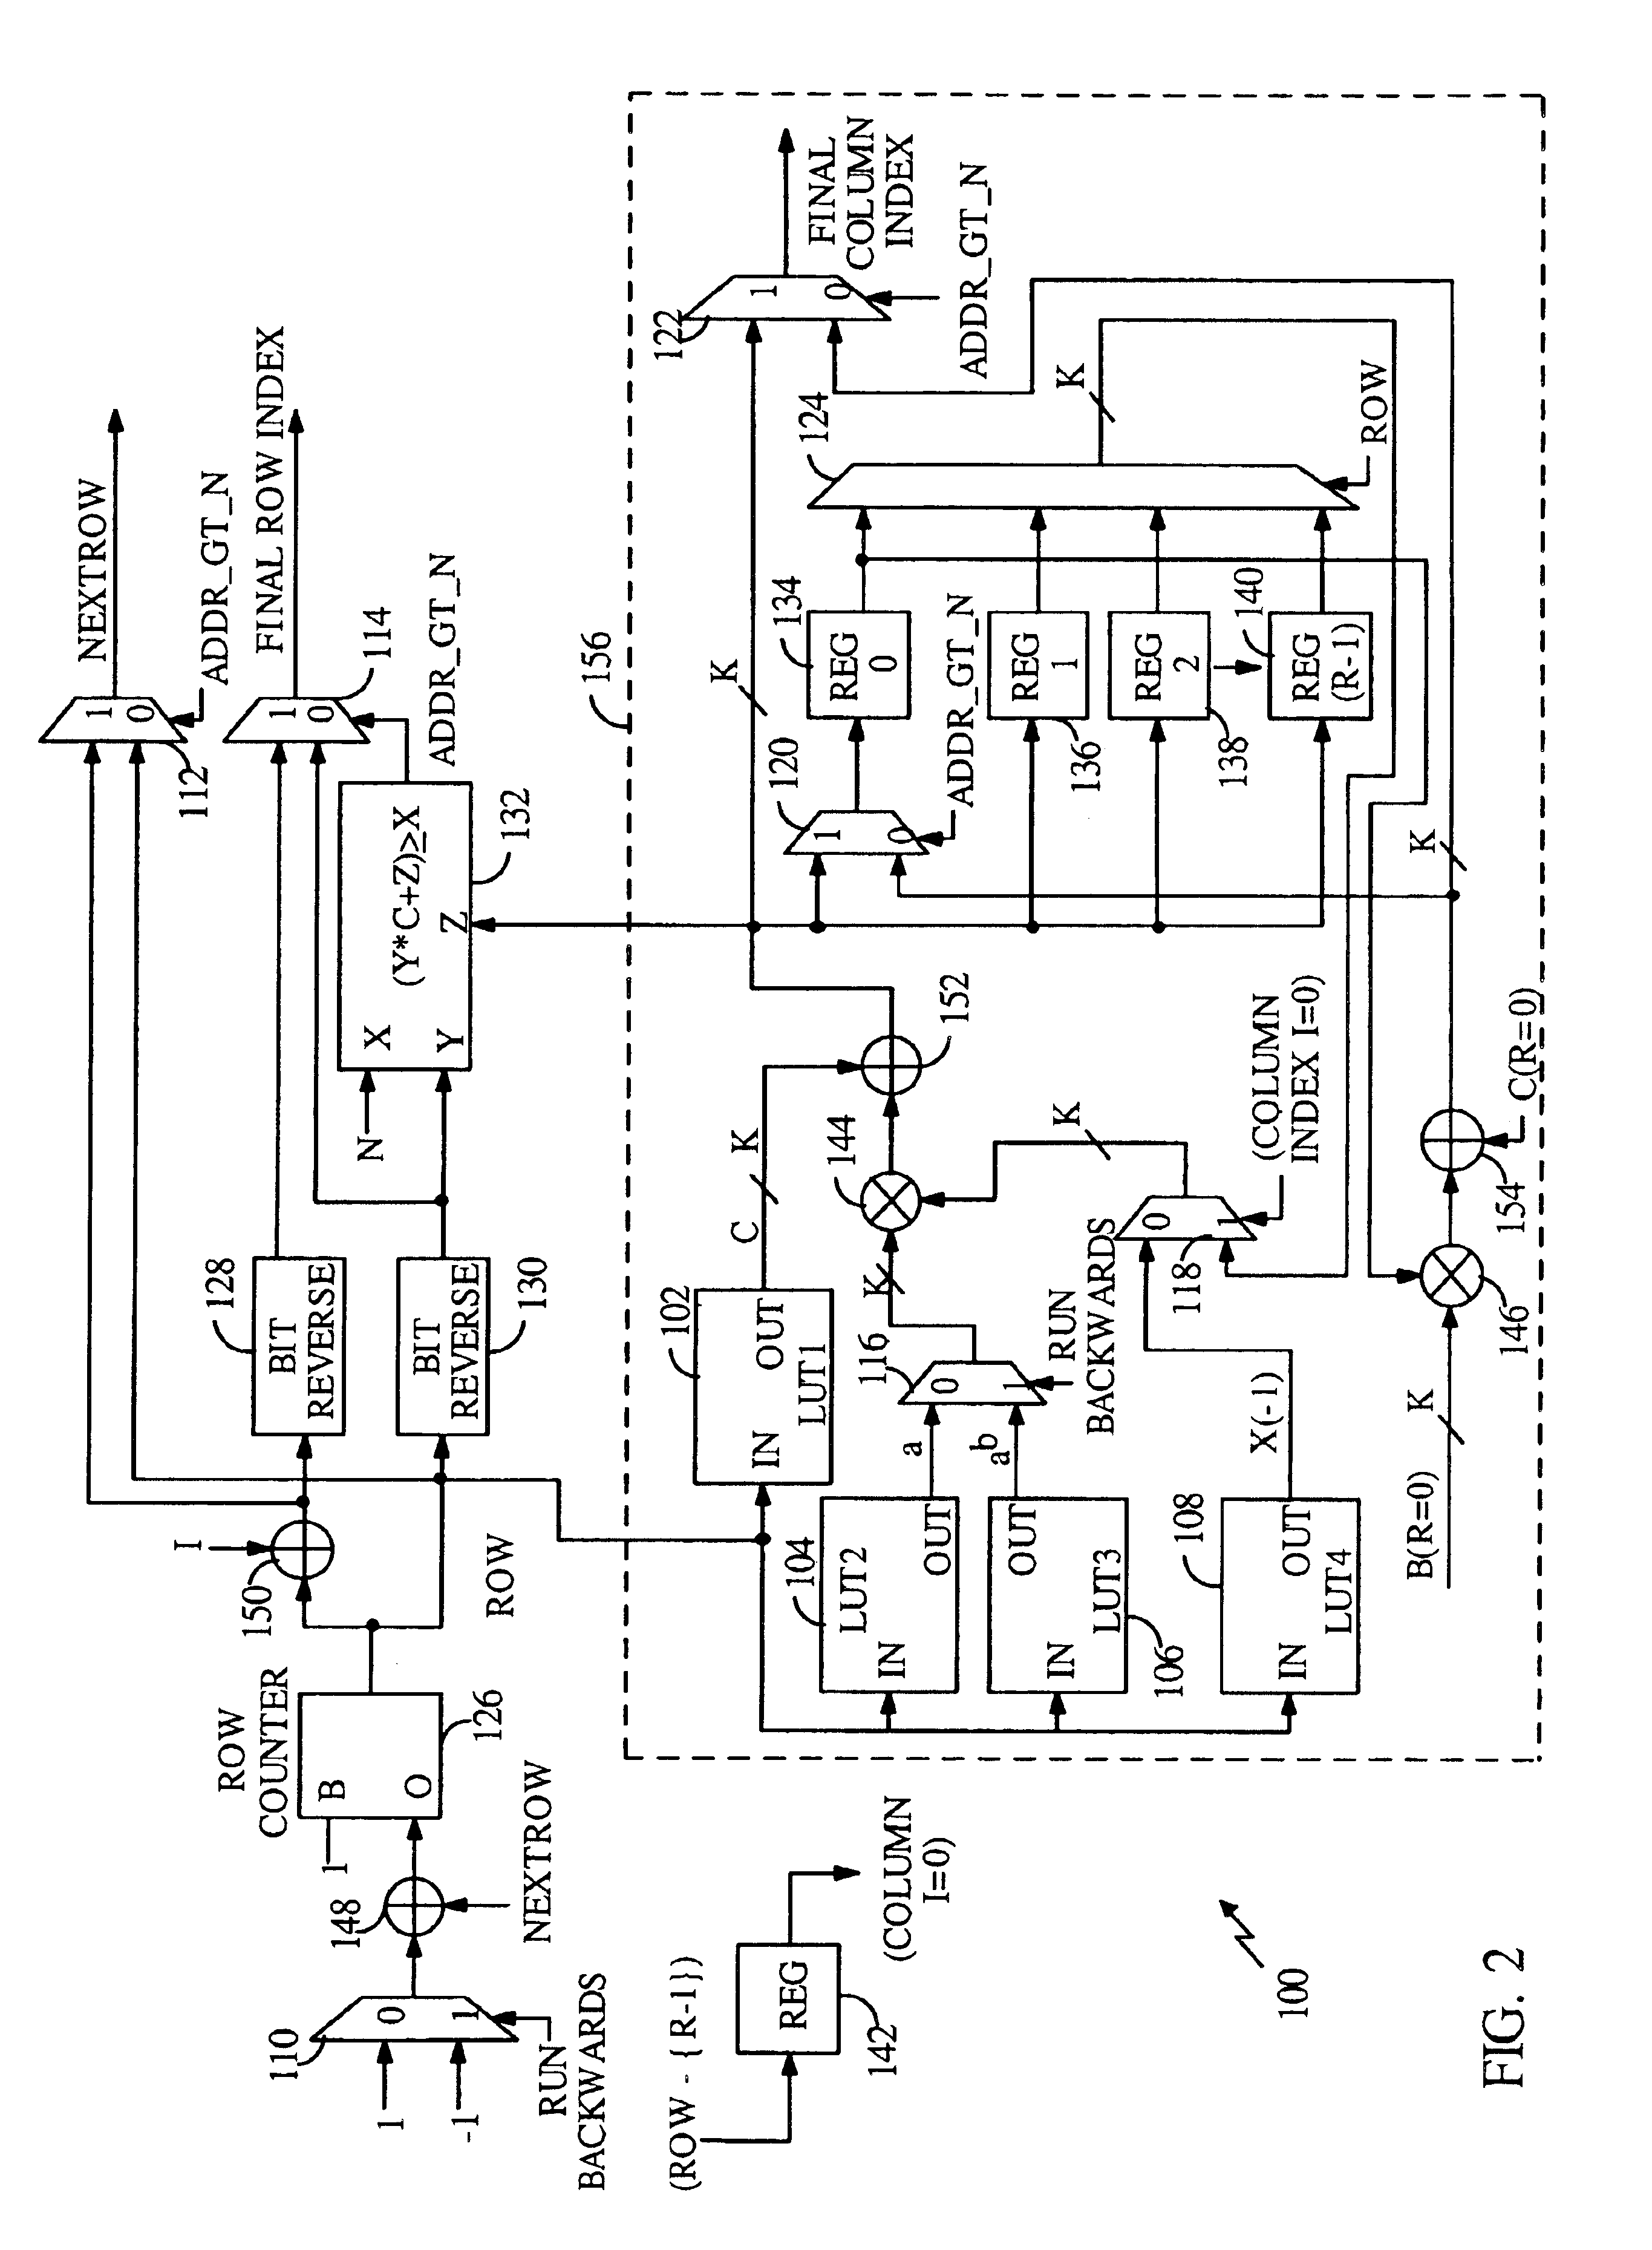 Random-access multi-directional CDMA2000 turbo code interleaver